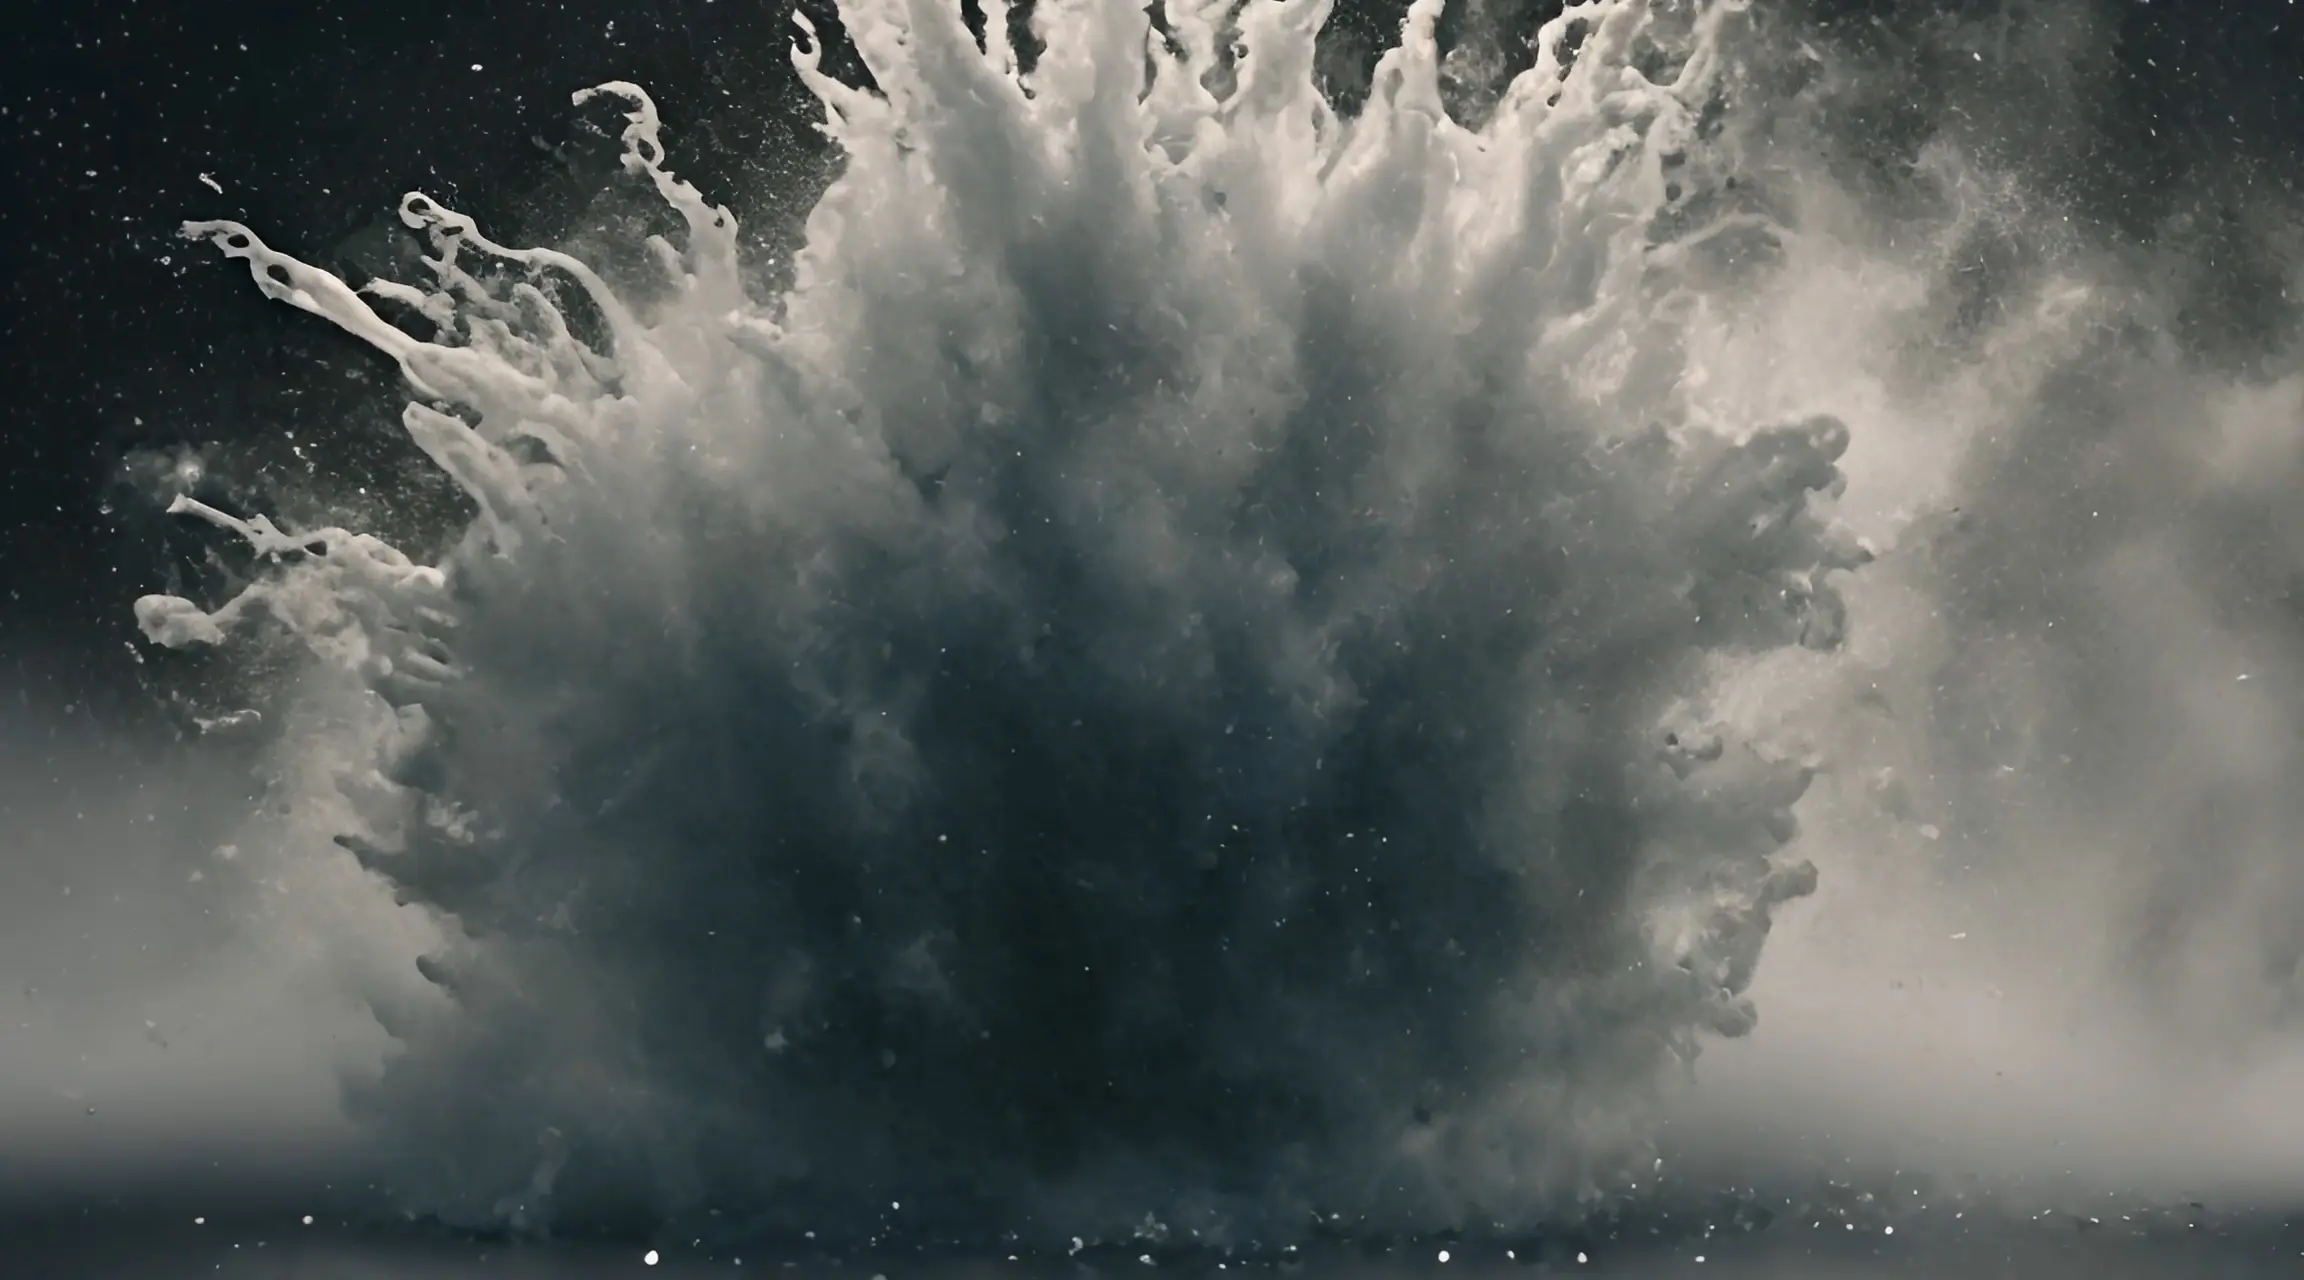 Turmoil Underwater Explosion Backdrop Stock Video